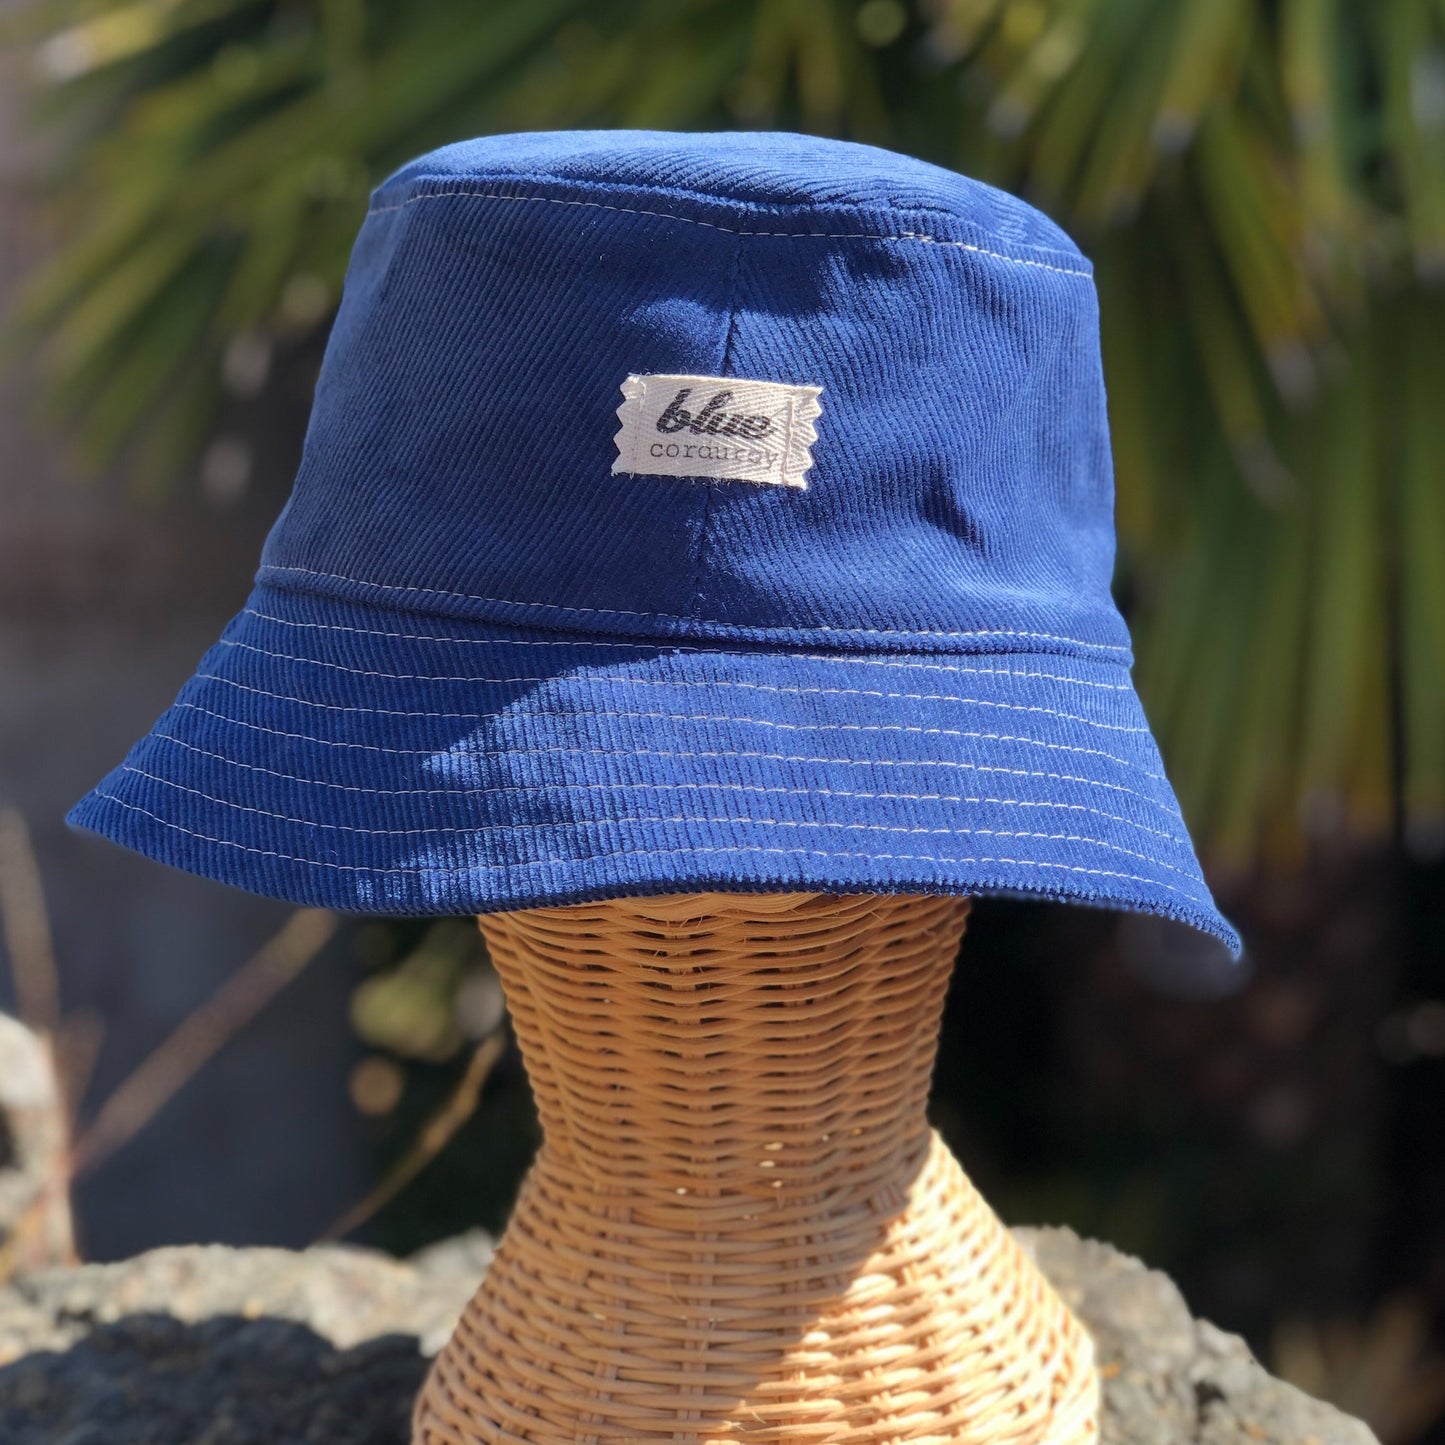 Bright blue corduroy bucket hat outside on rattan mannequin head